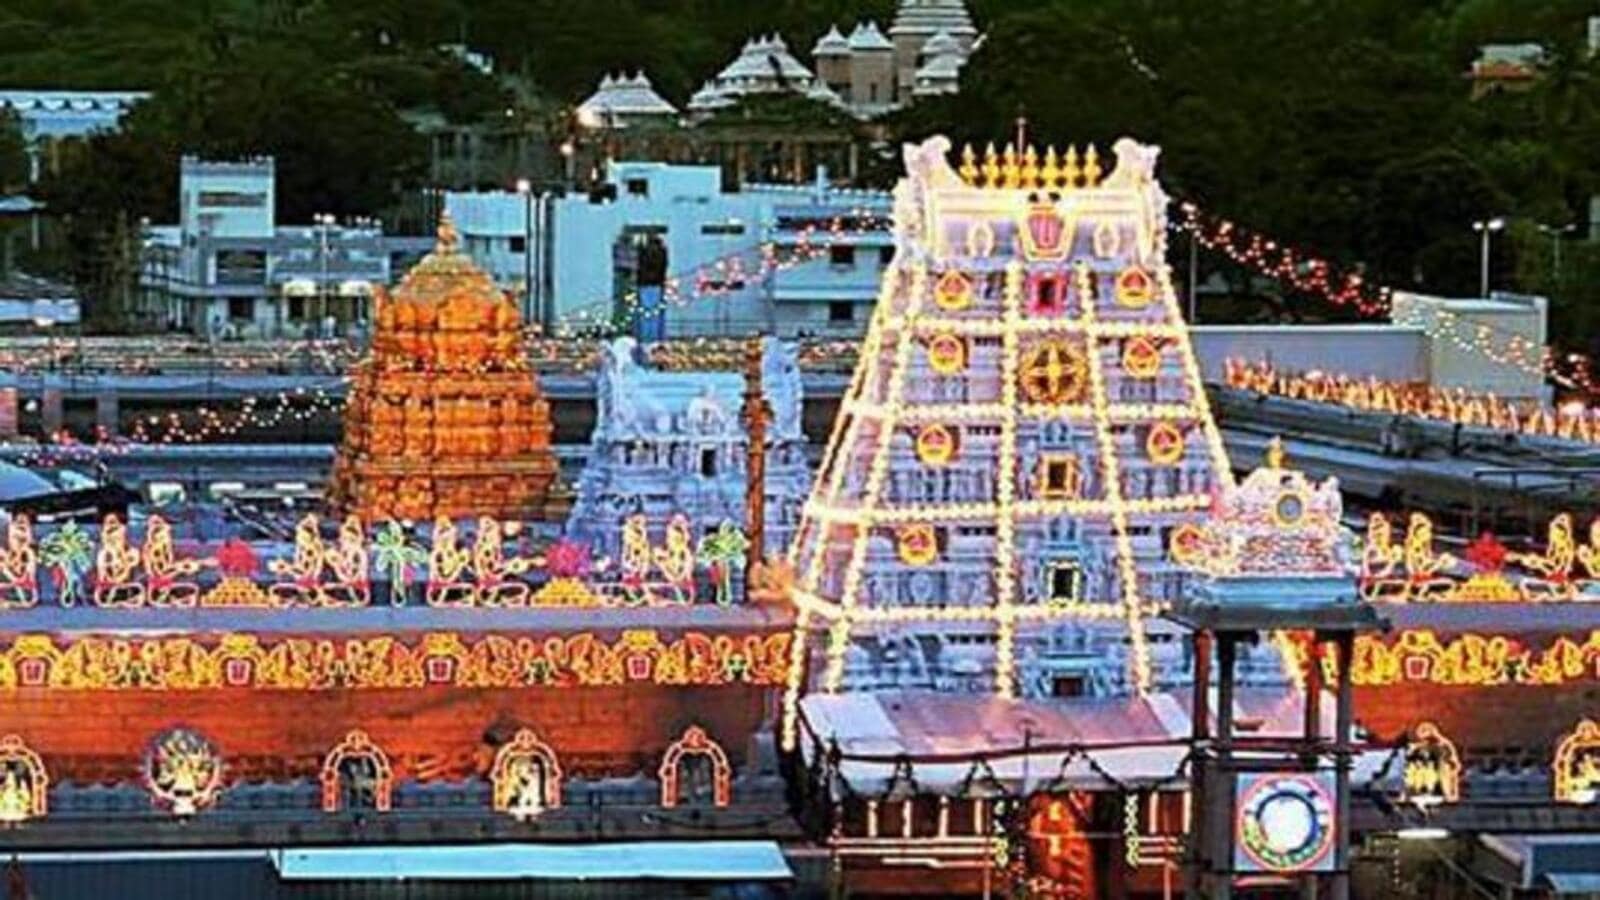 Tirupati temple refutes actress' bribe claims | Latest News India ...